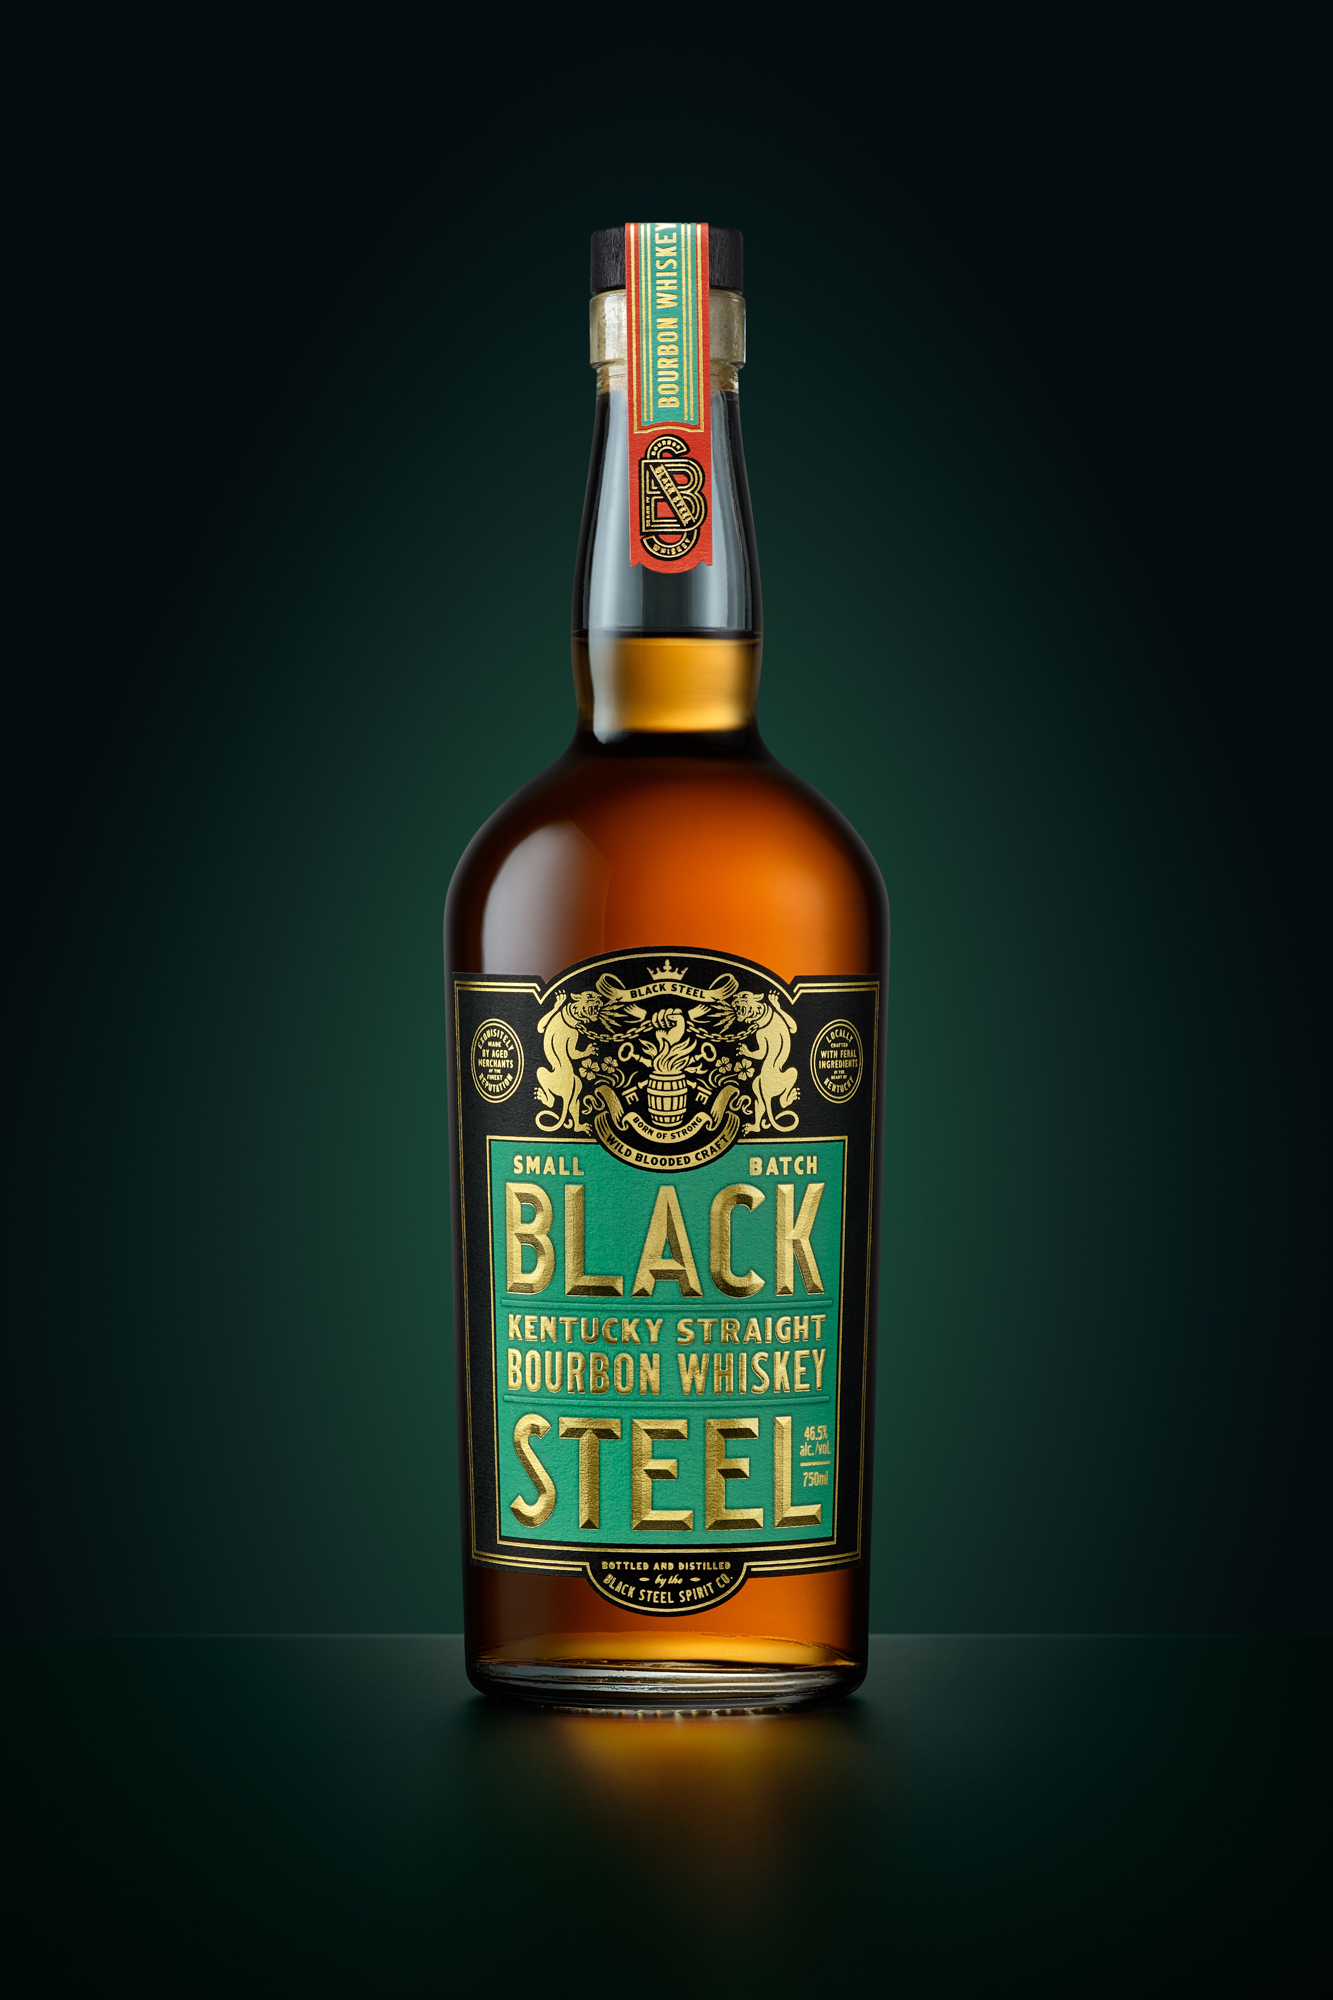 Black Steel Bourbon designed by Chad Michael Studio